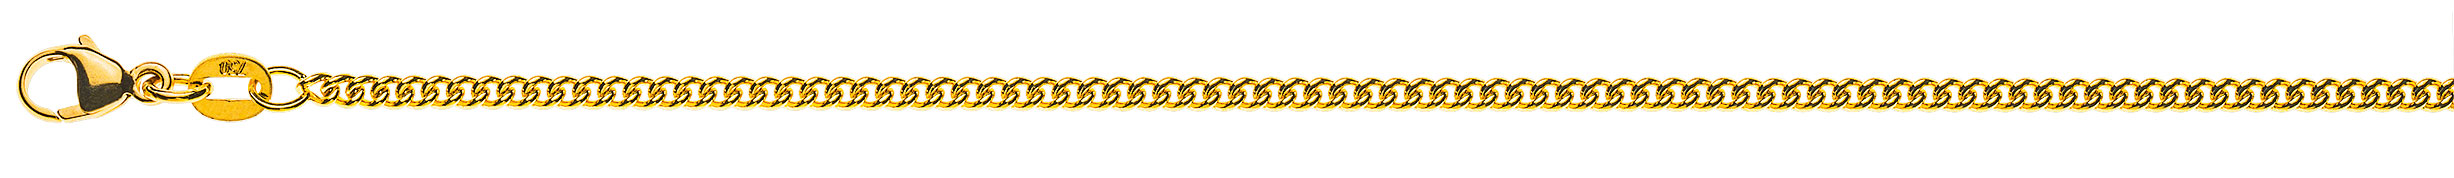 AURONOS Prestige Necklace yellow gold 18K round curb chain 50cm 2.1mm